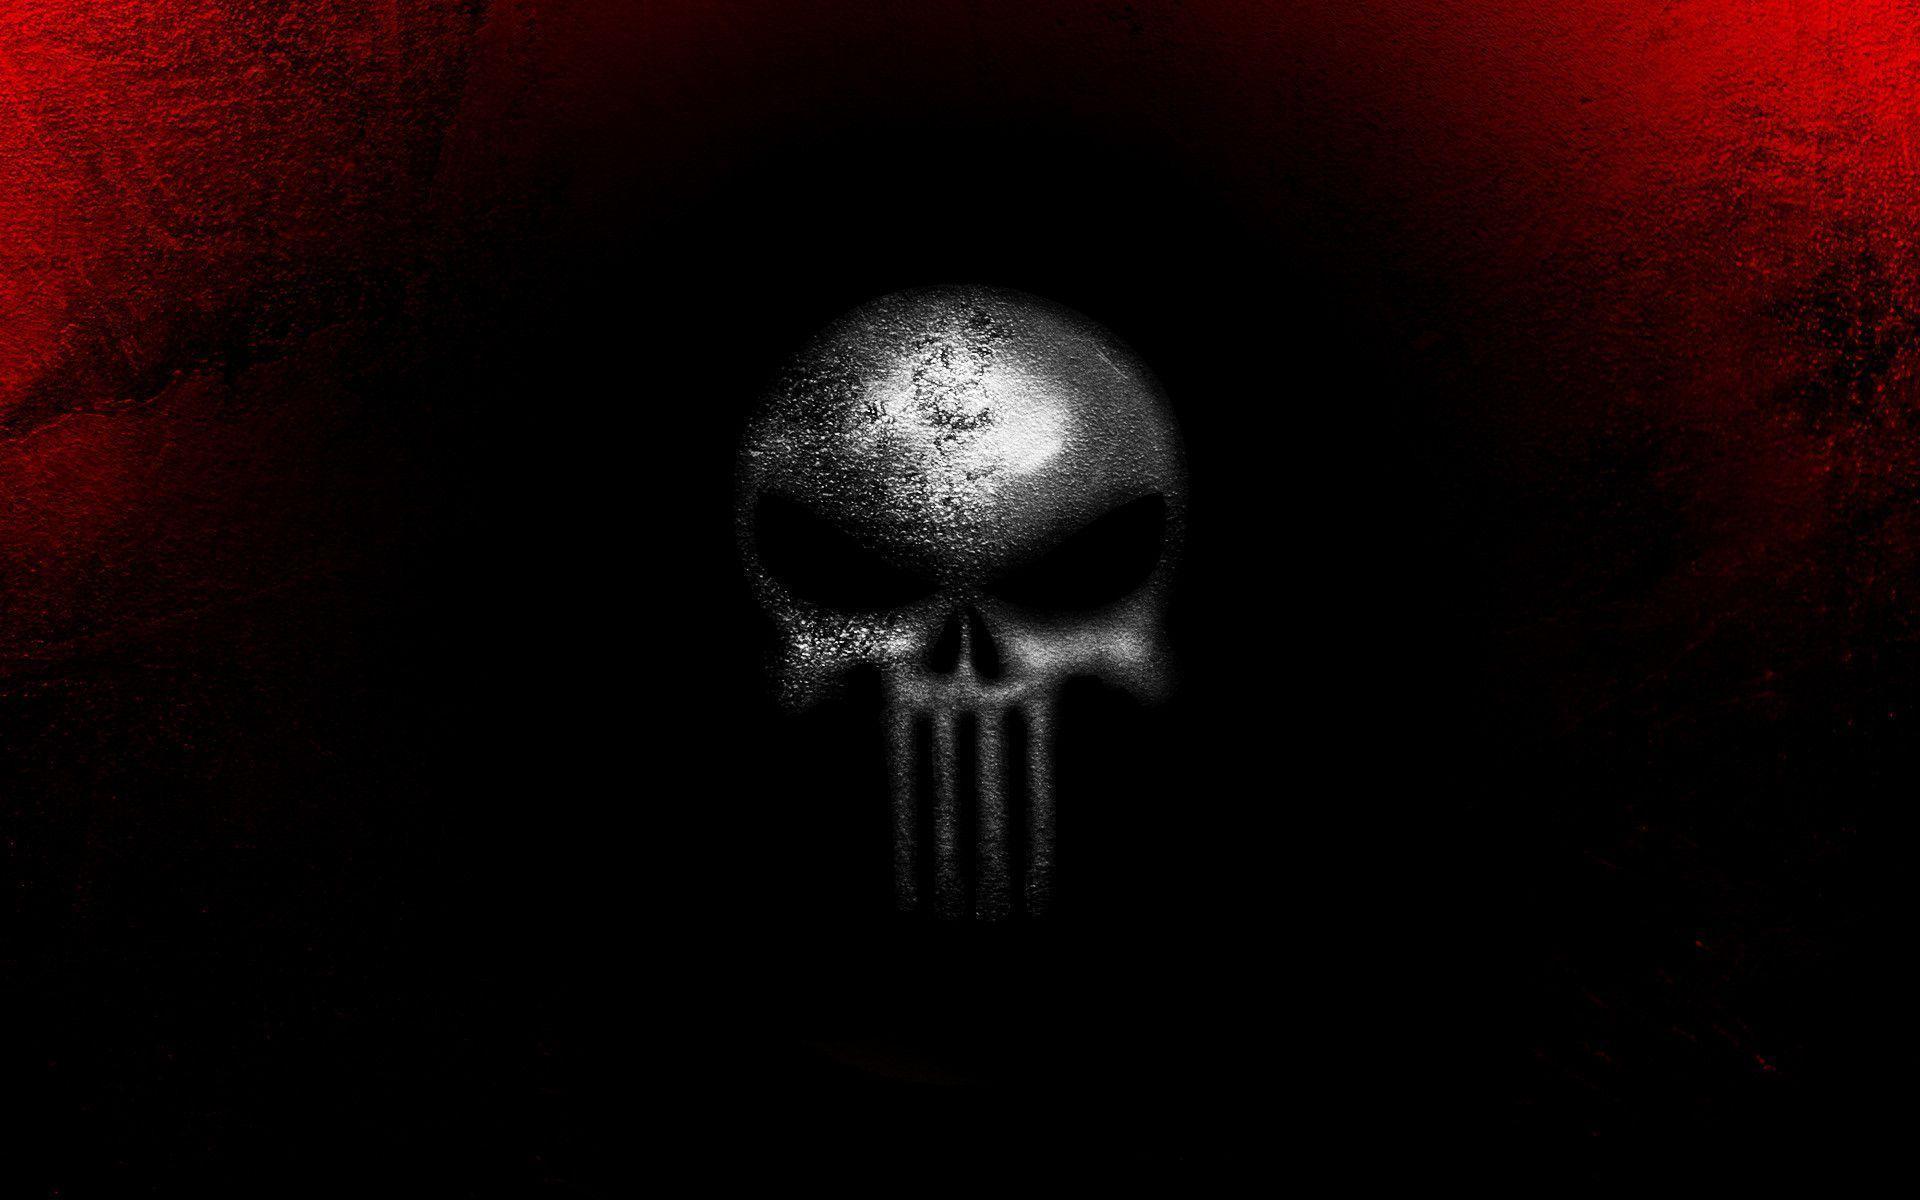 Punisher Skull HD Wallpaper. Download HD Wallpaper, High